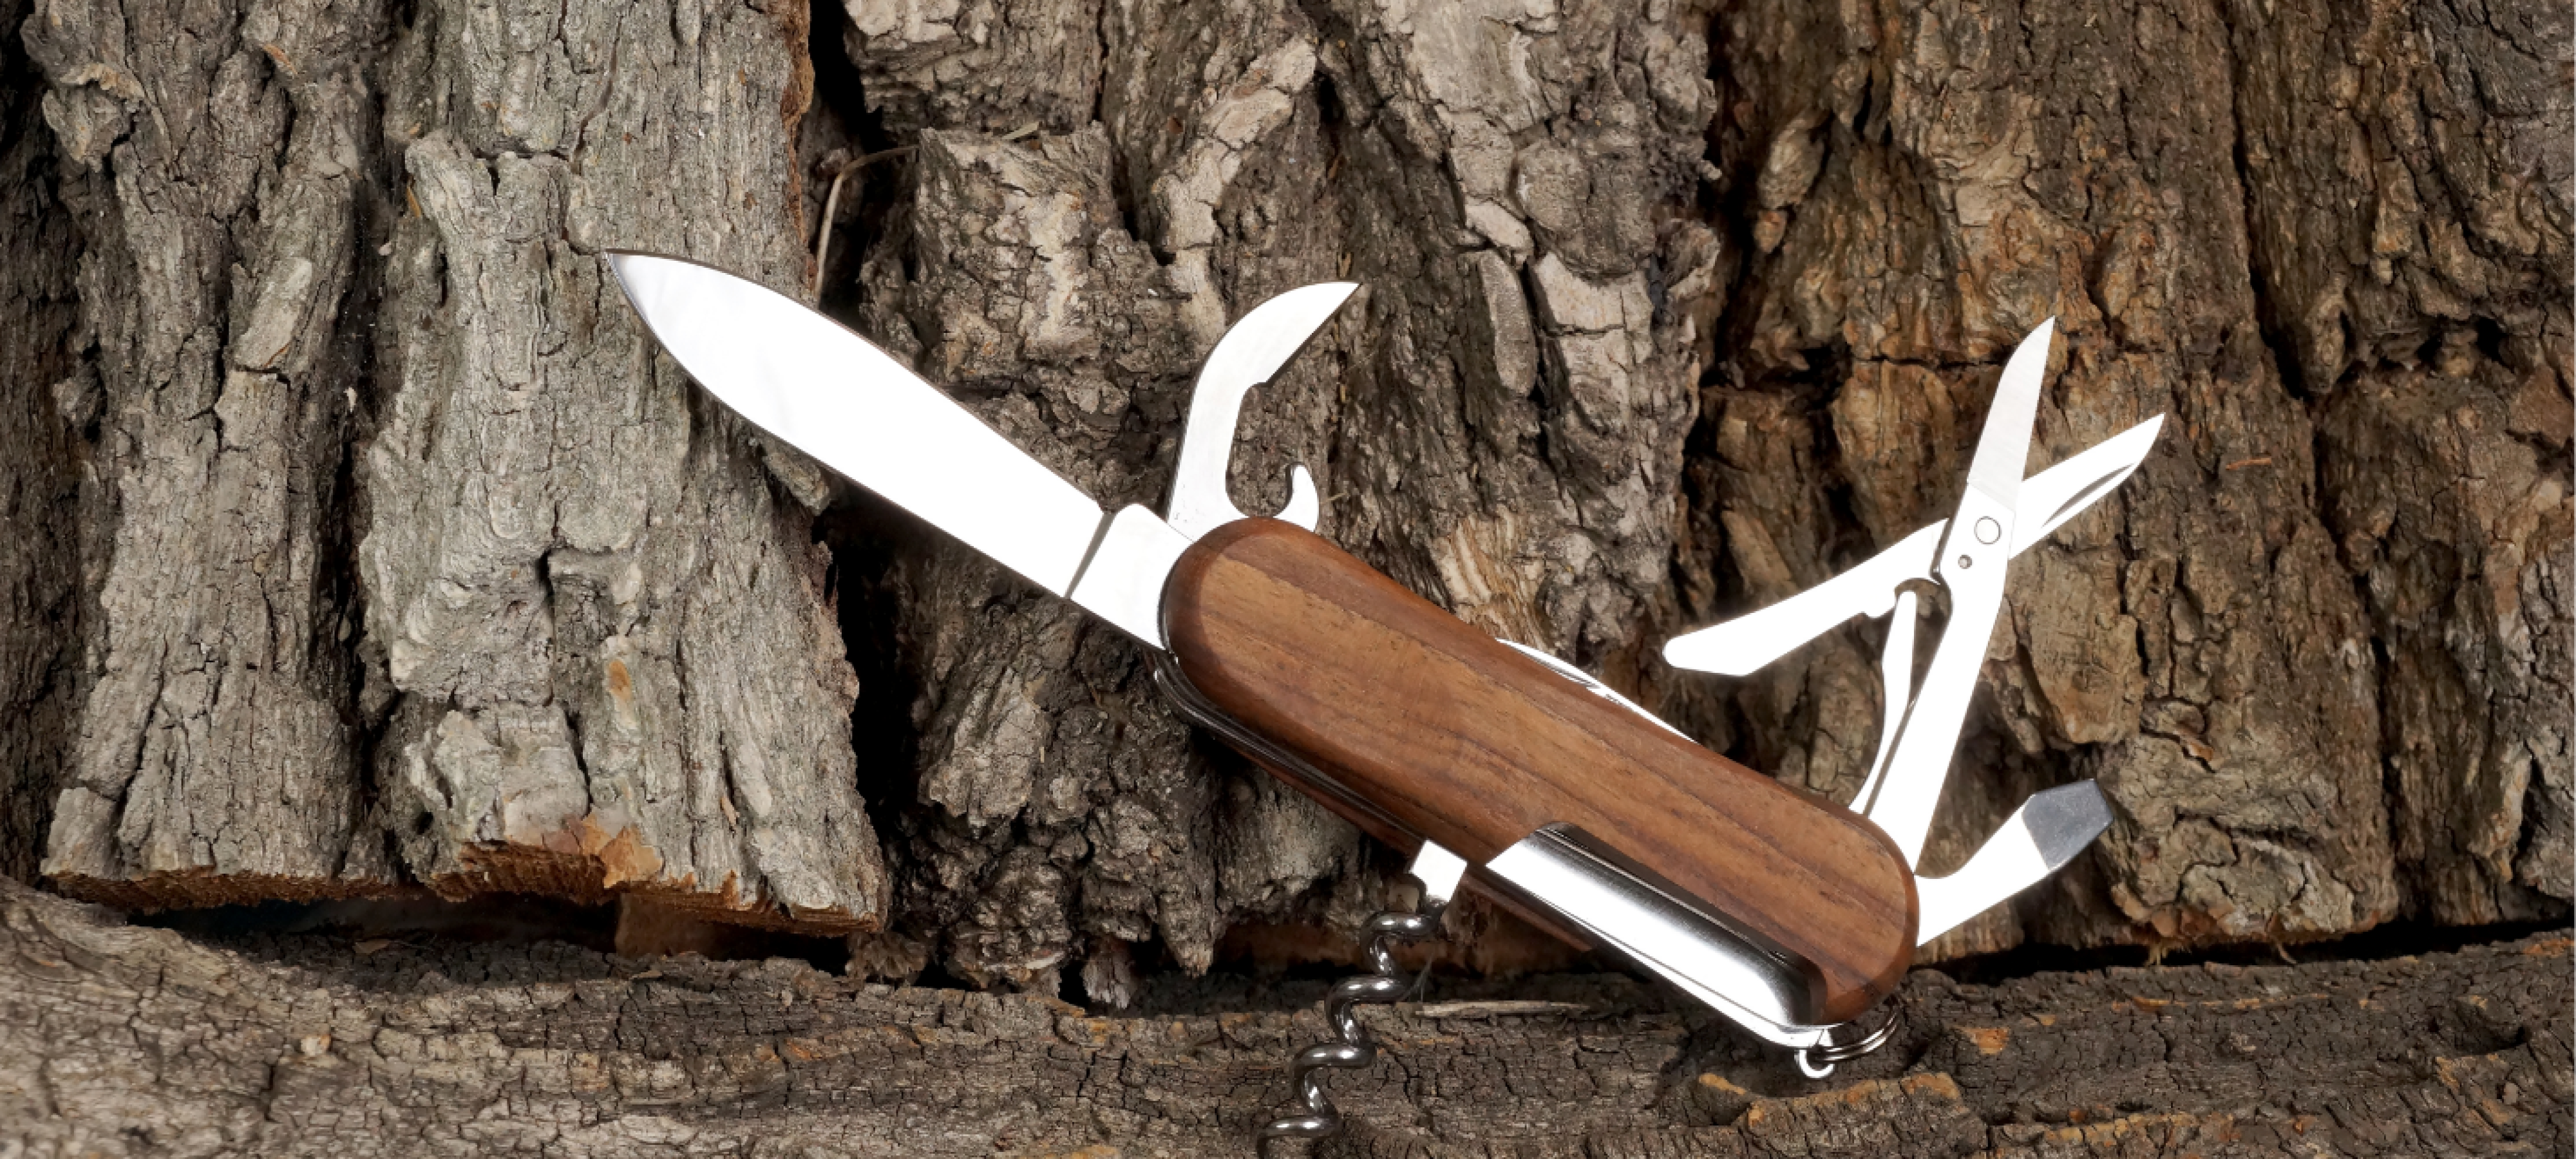 Top Bushcraft Knives Under $100 for Long Term Survival